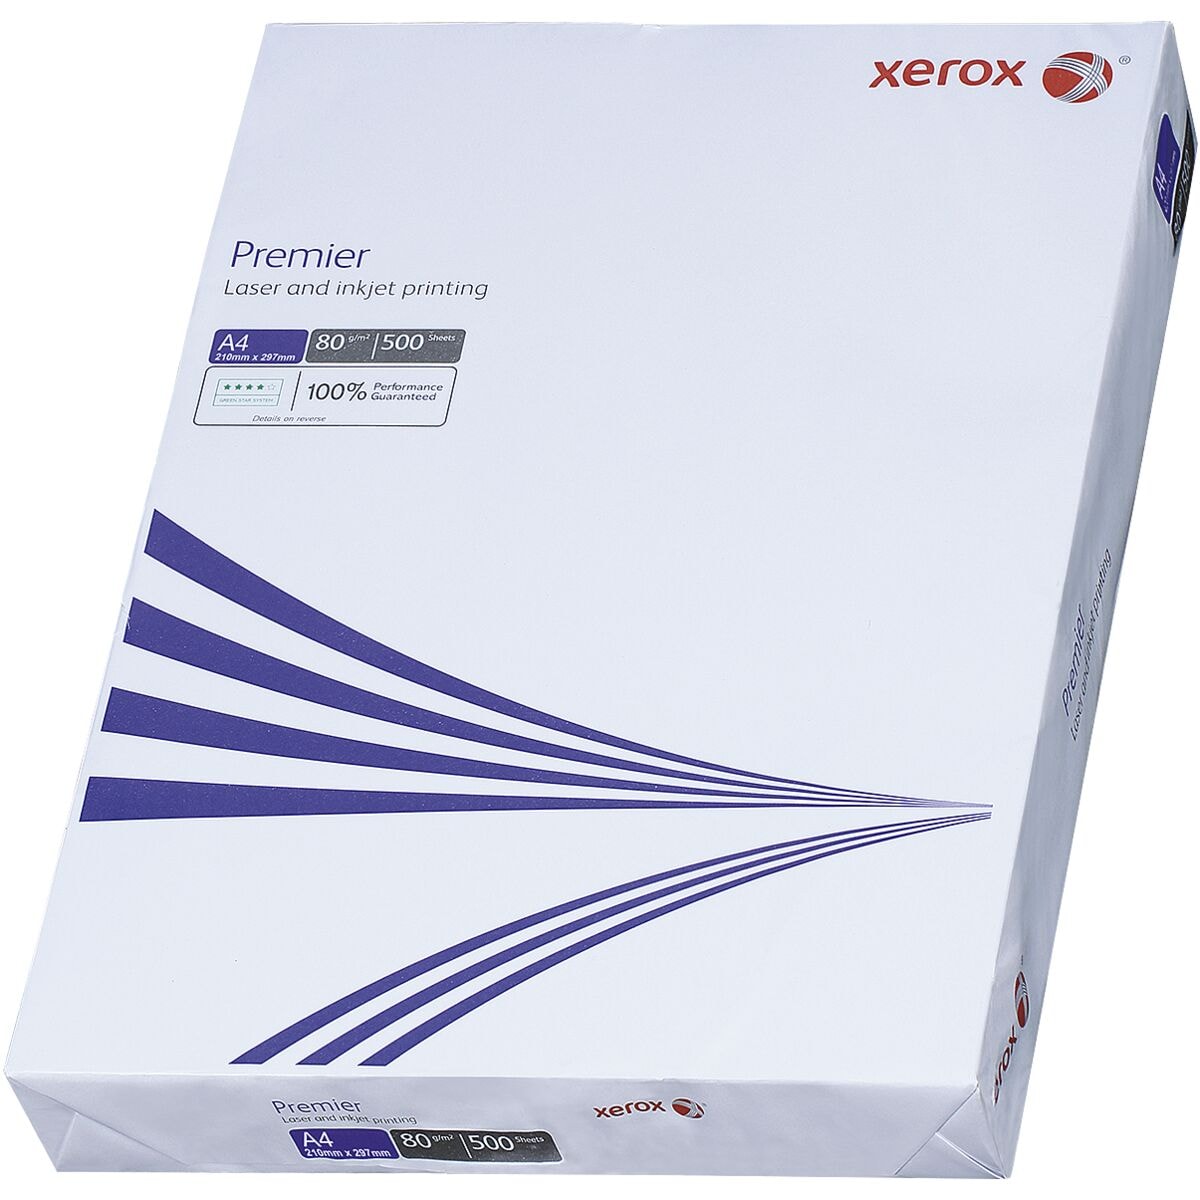 Multifunktionales Druckerpapier A4 Xerox Premier - 500 Blatt gesamt